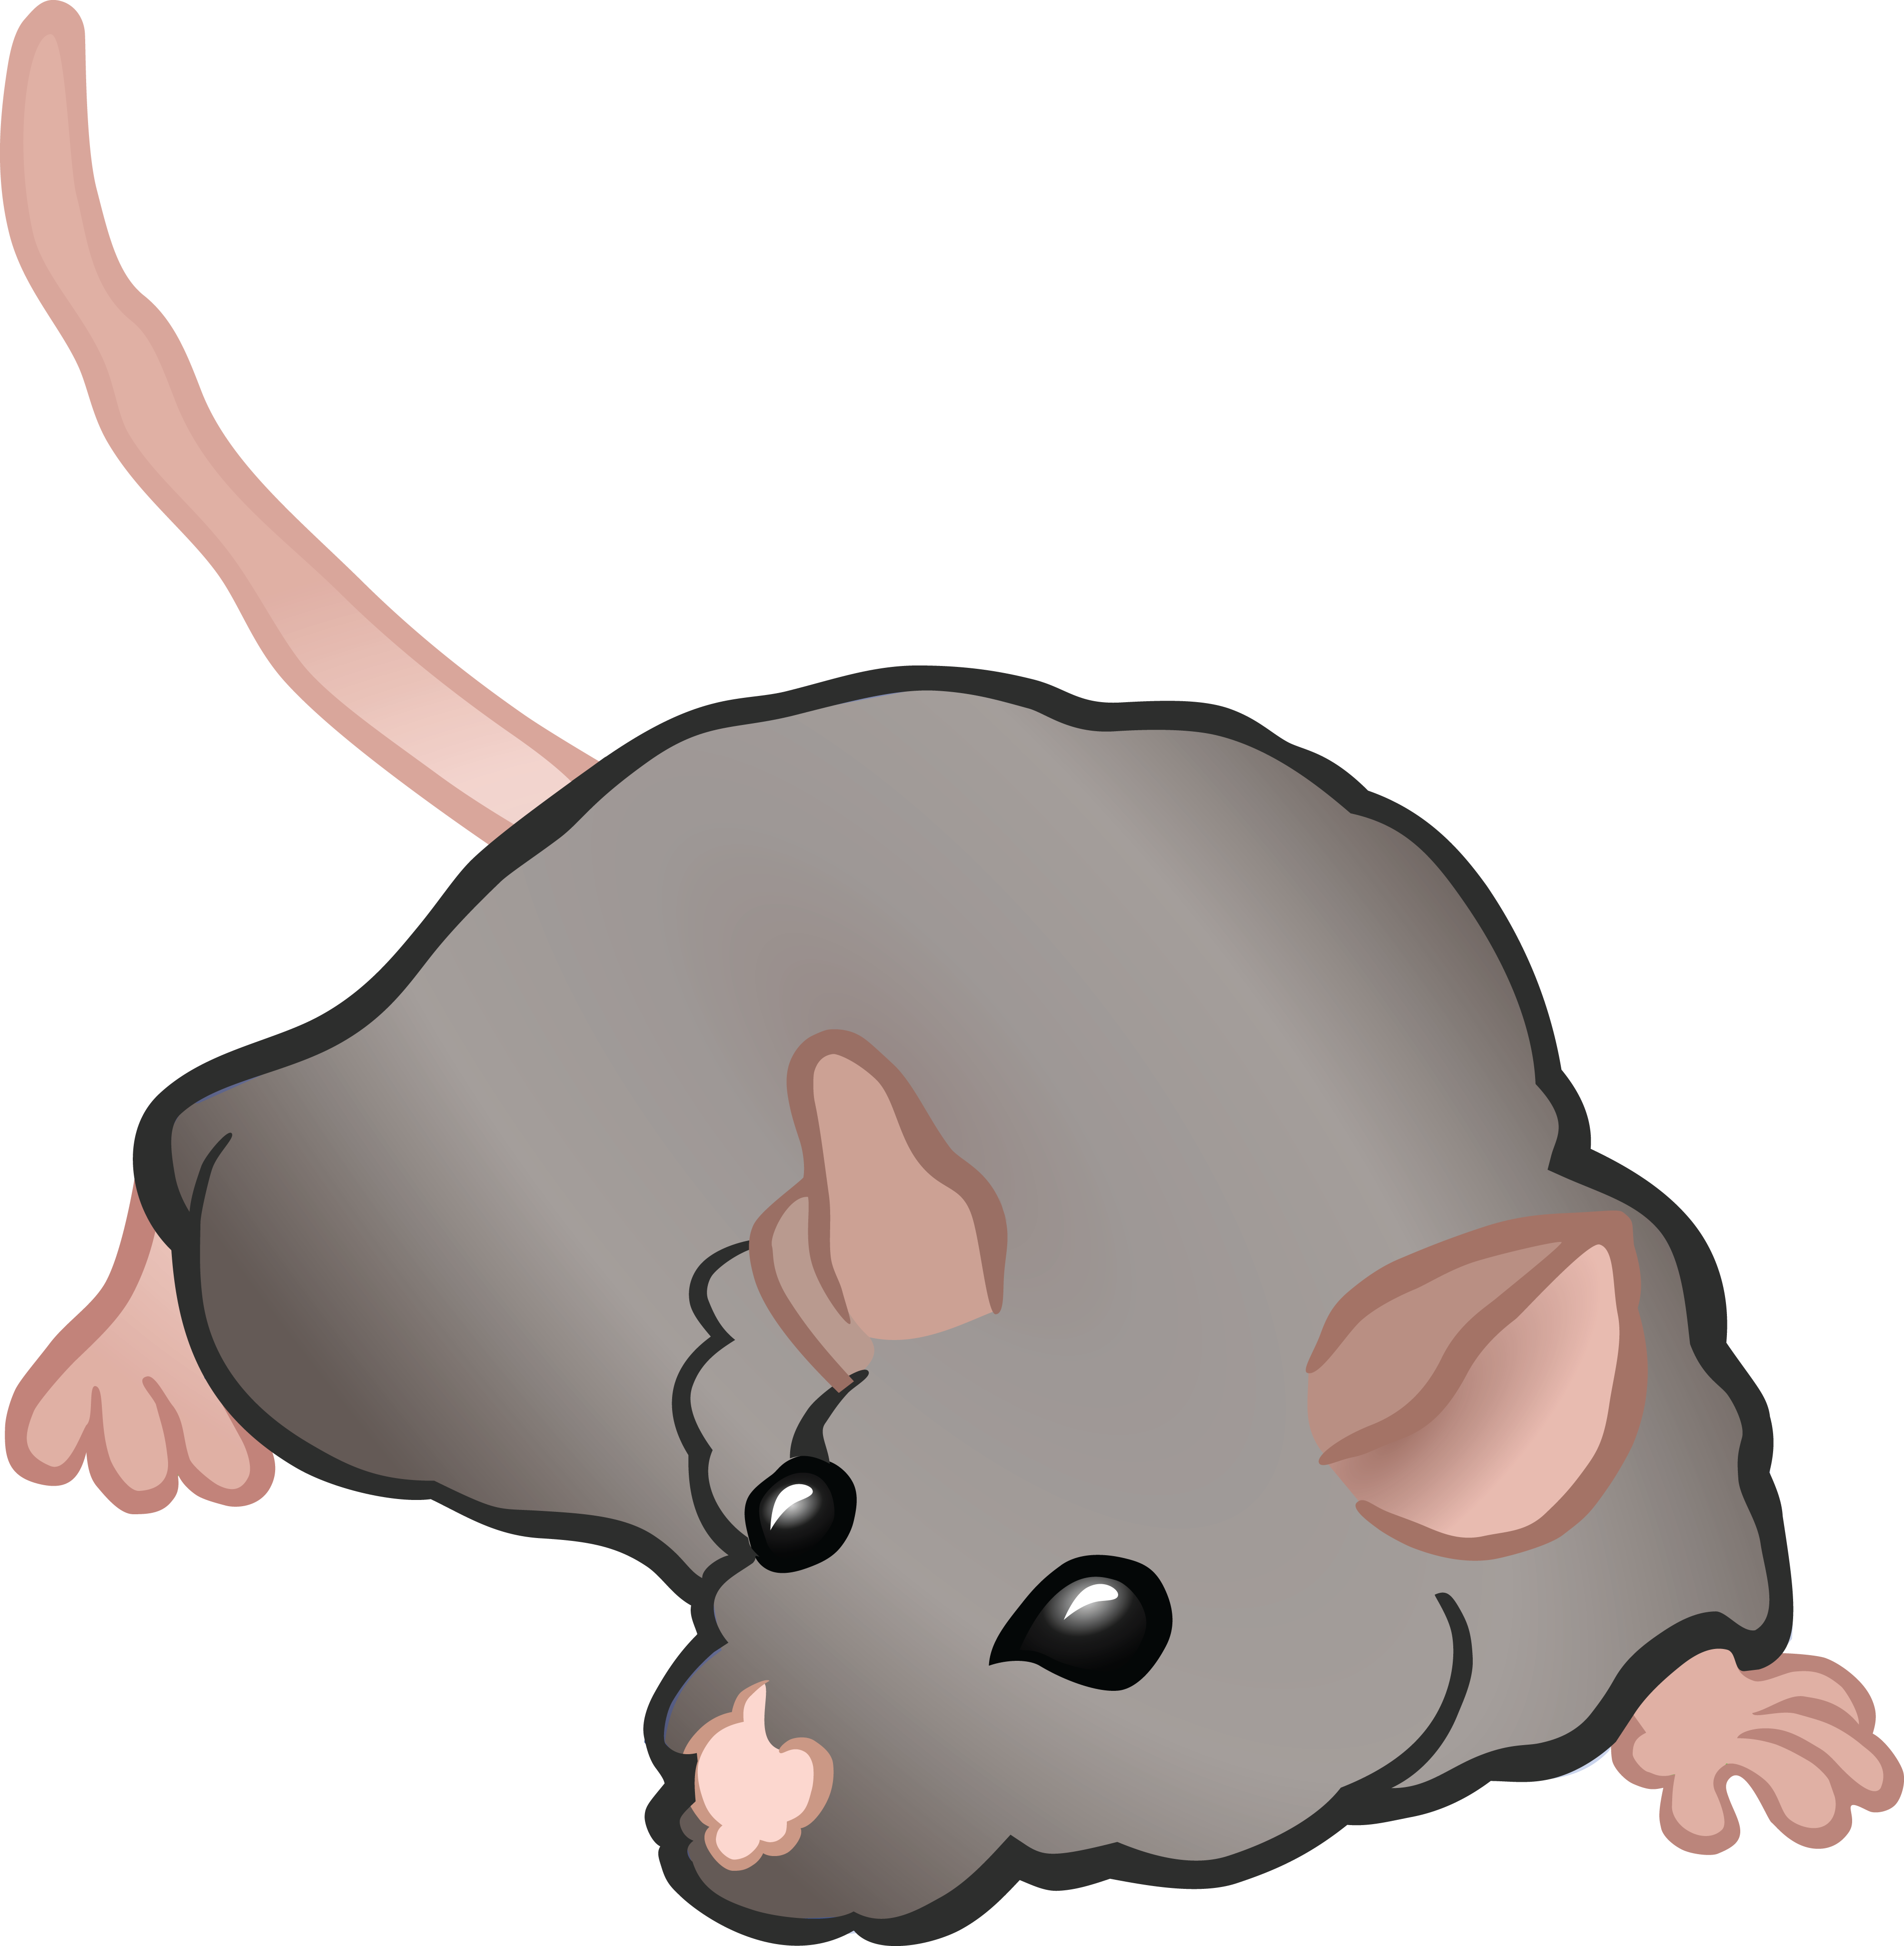 Мыши д. Мышка 2д. Мышь вектор. Мышки мультяшки. Мышки животные.